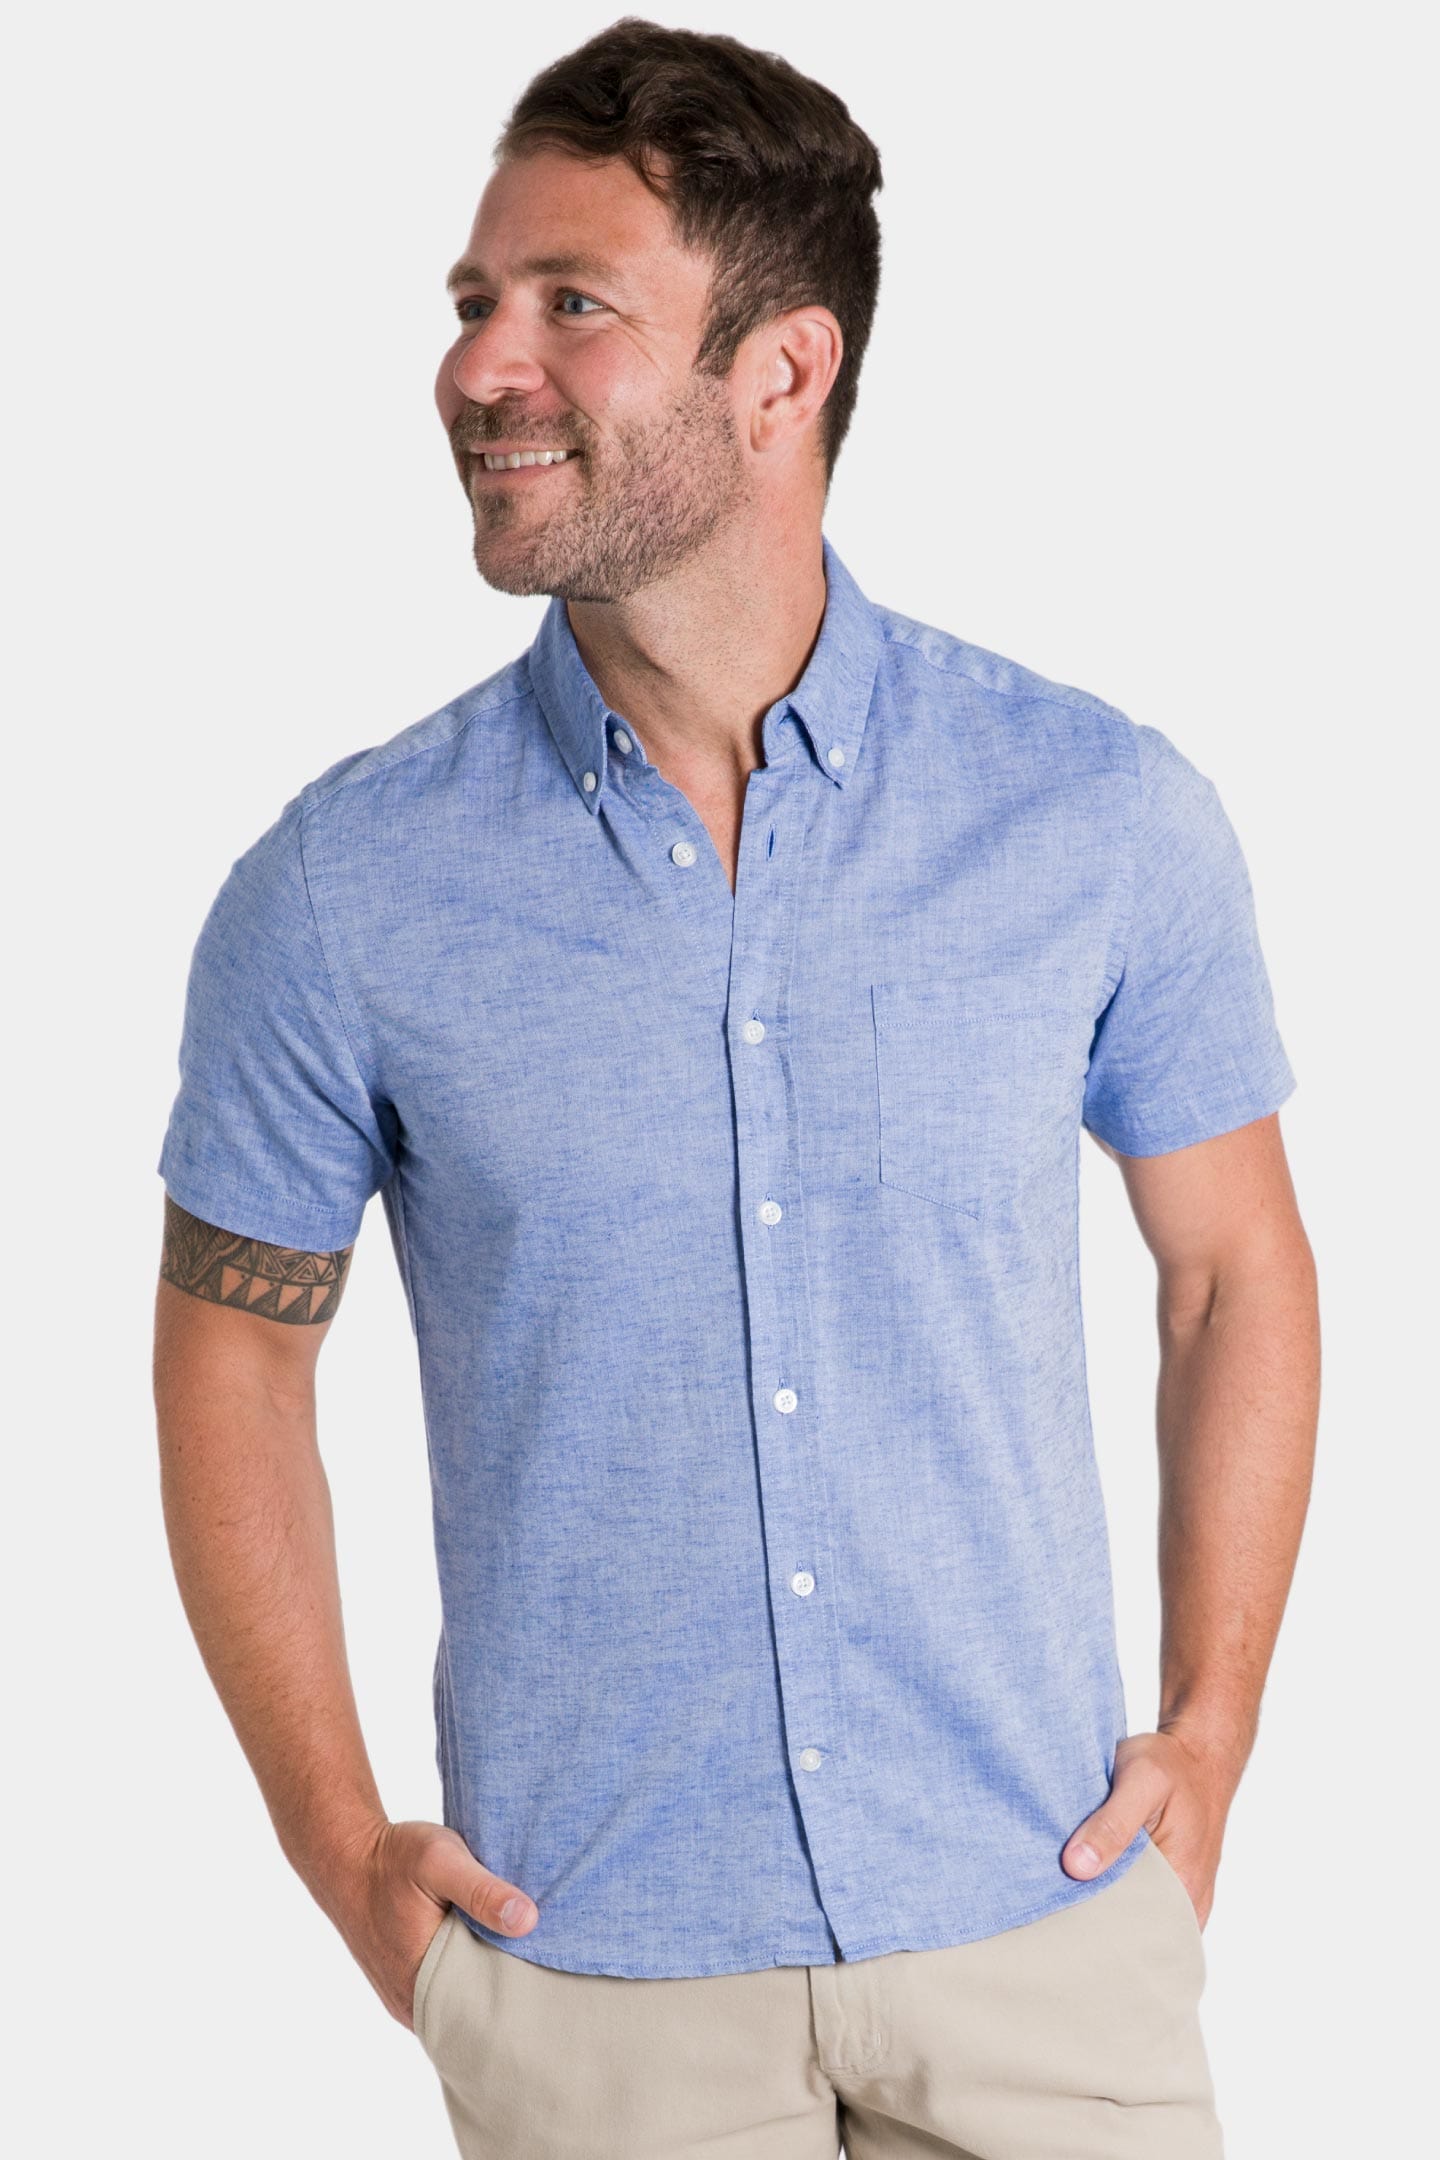 Ash & Erie Blue Linen Short Sleeve Shirt for Short Men